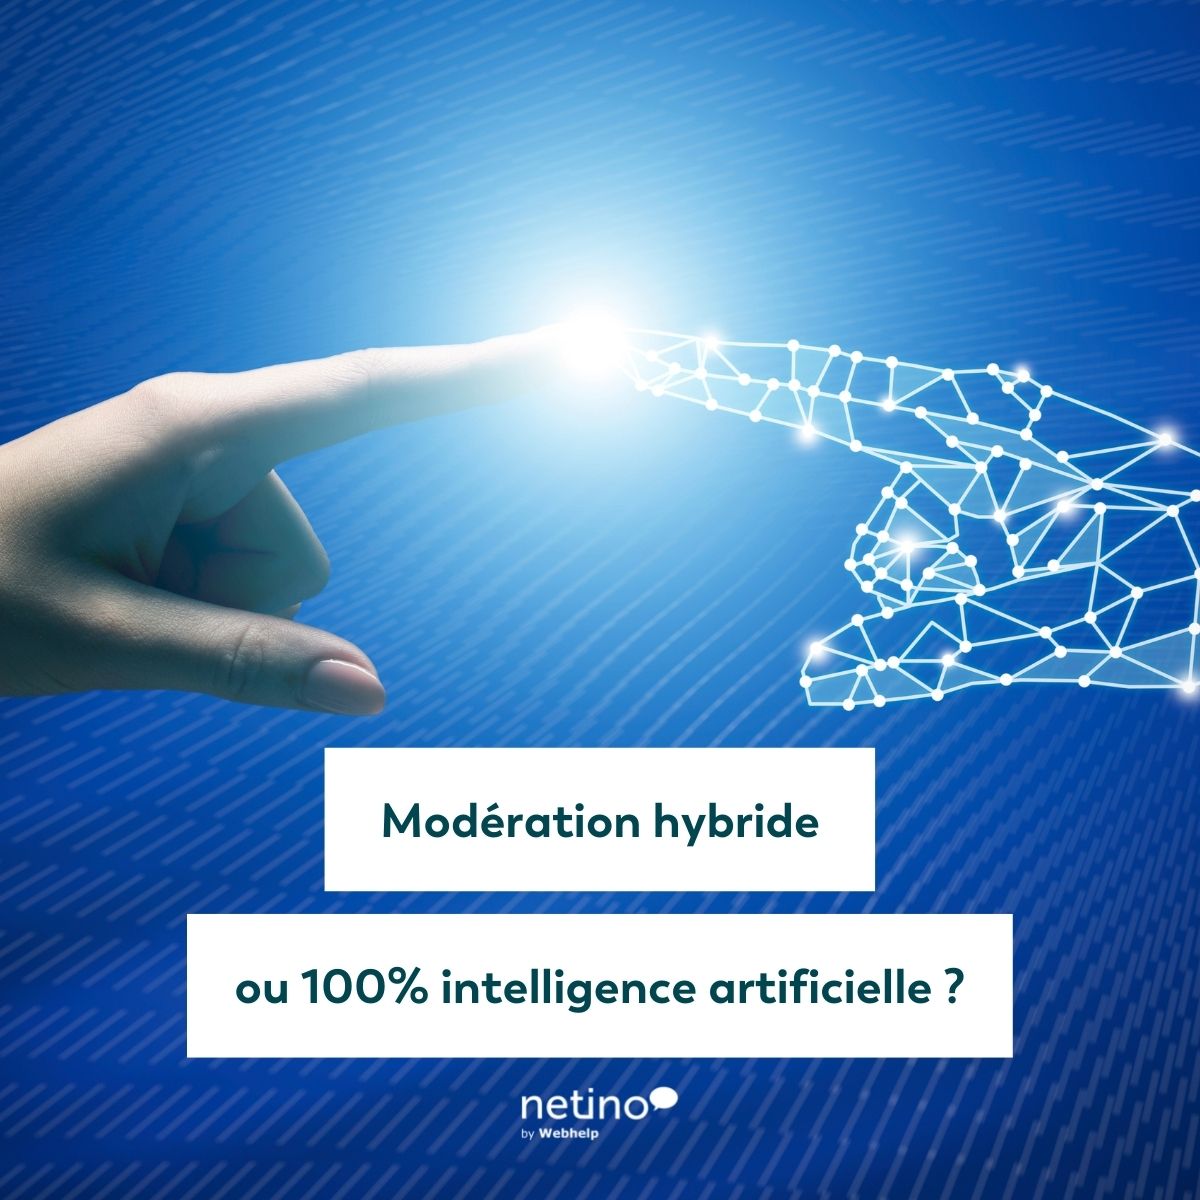 Hybrid moderation or 100% artificial intelligence? | Netino by Webhelp